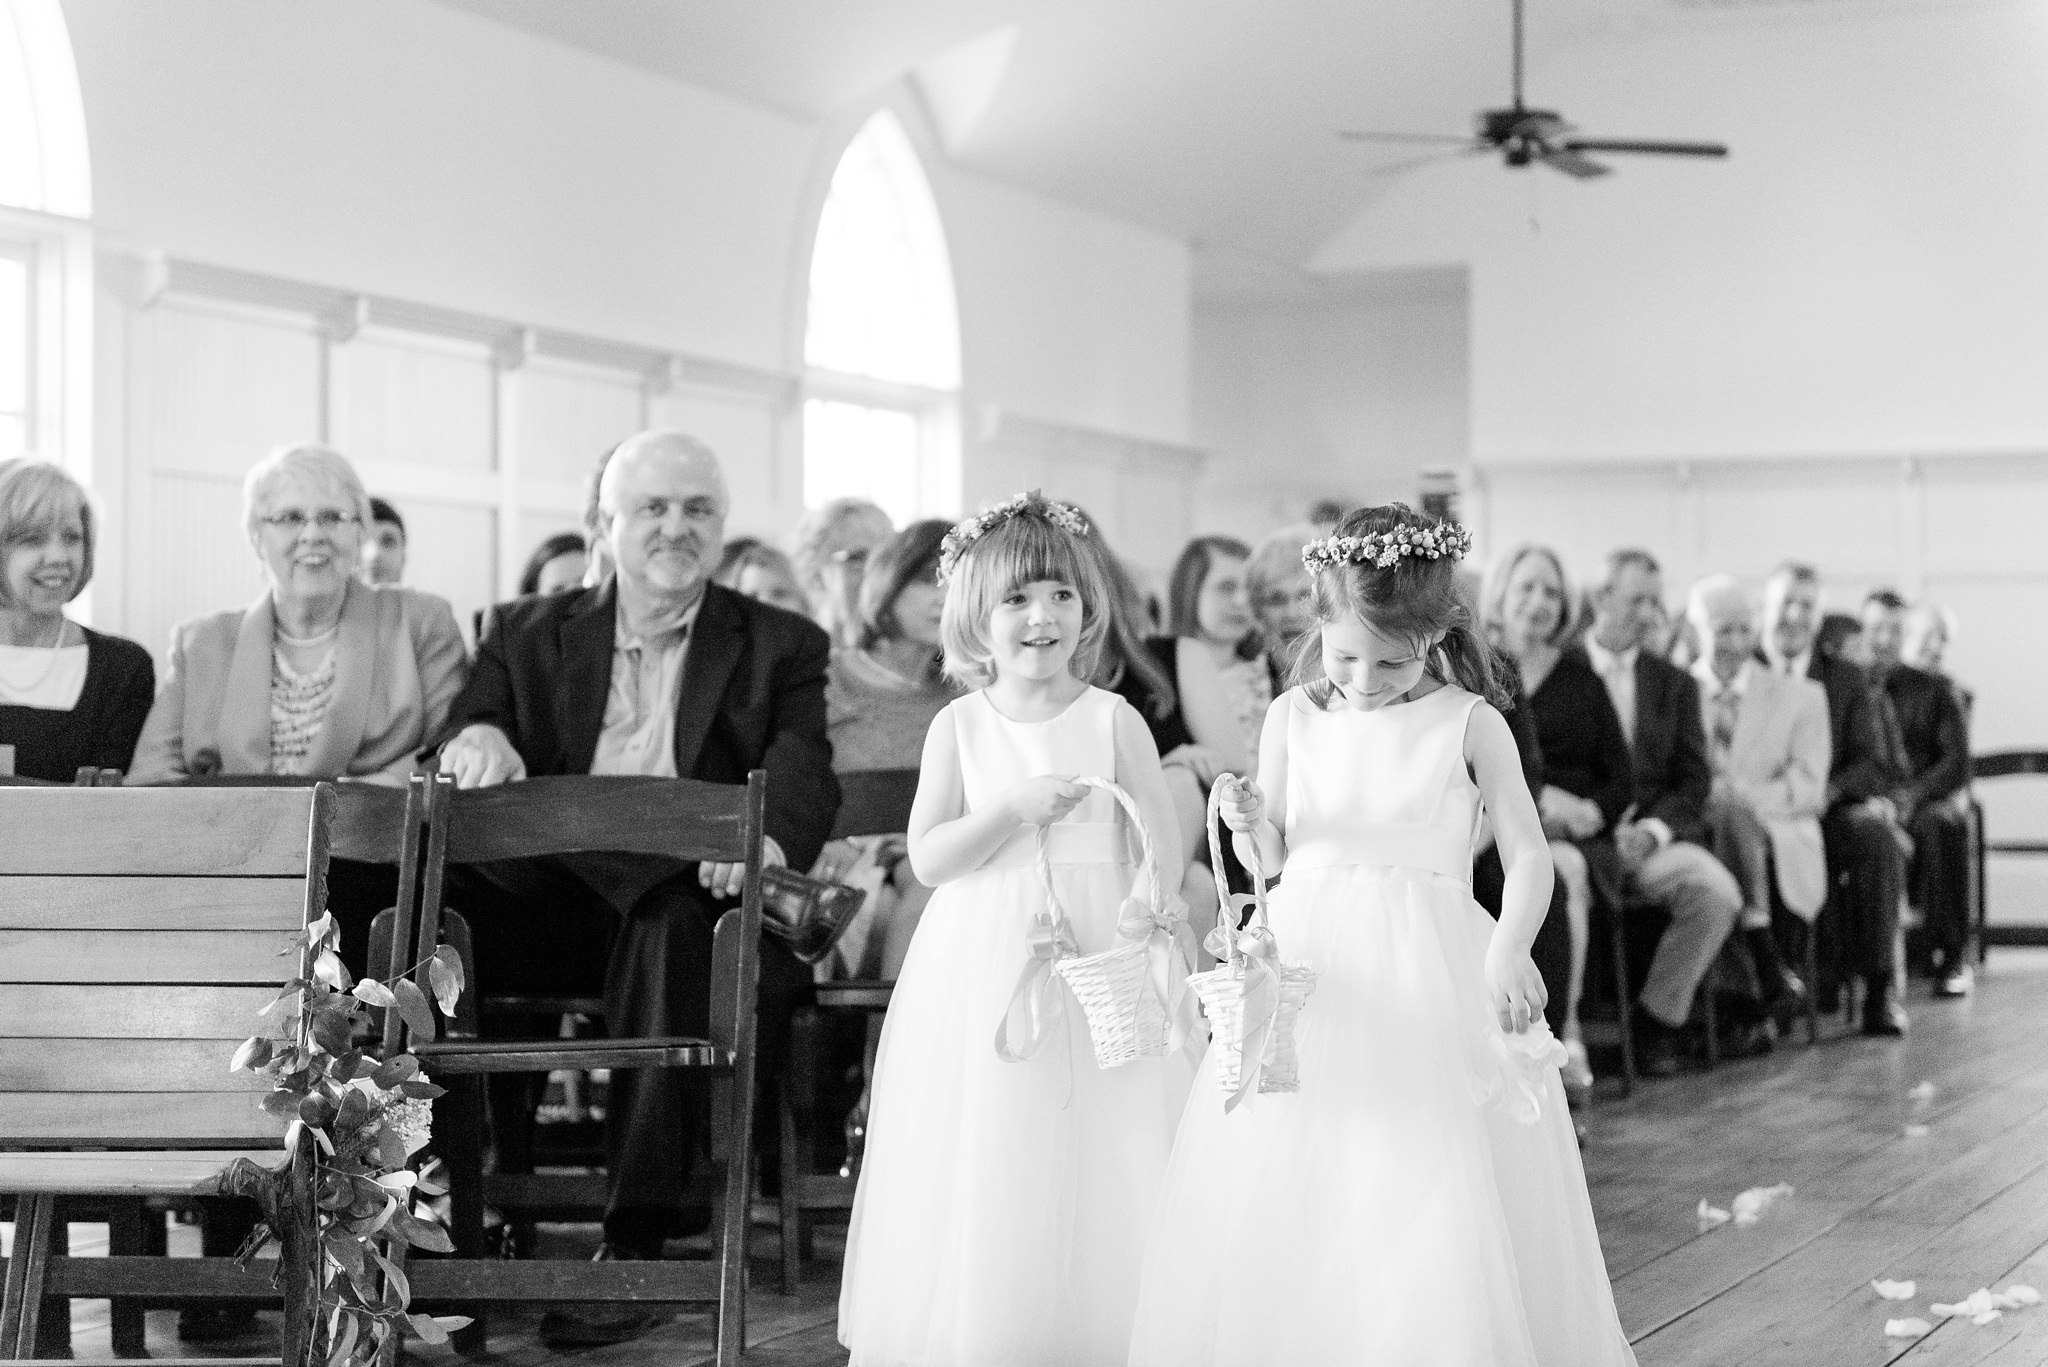 Aqua and Teal Spring Garden Wedding | Birmingham Alabama Wedding Photographers_0079.jpg